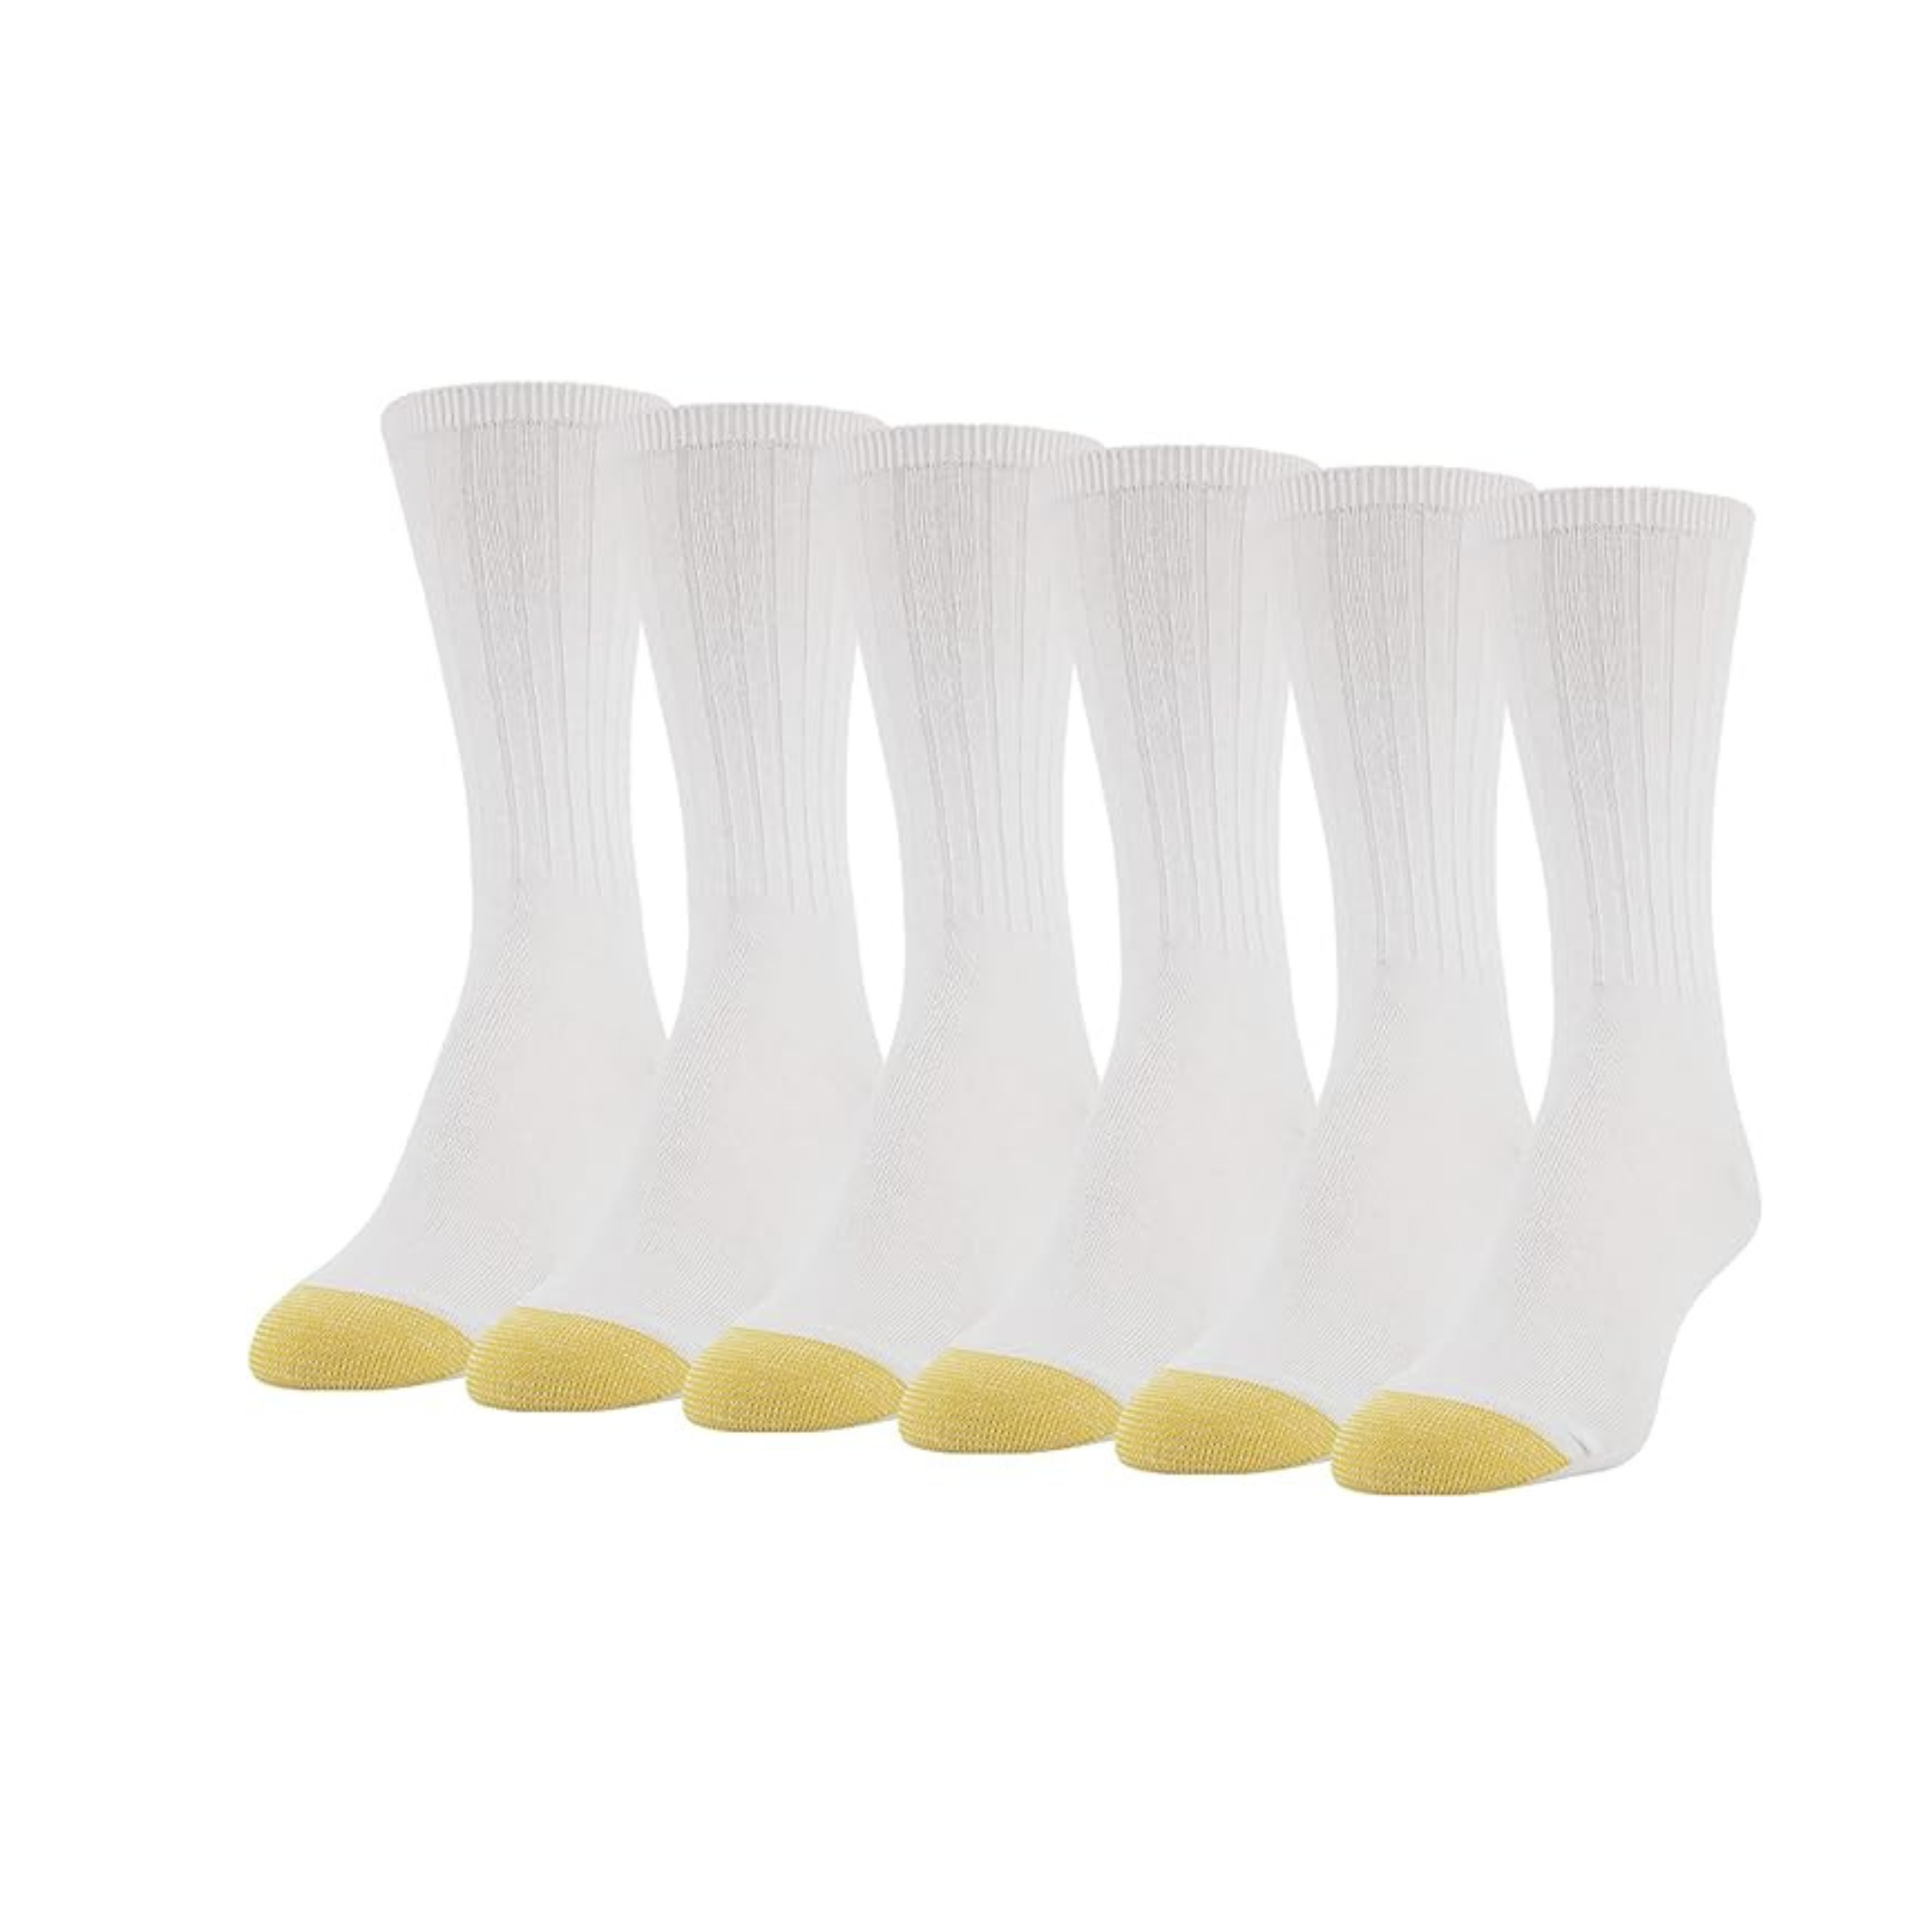 6 pairs of Goldtoe Women’s Casual Texture Crew Socks